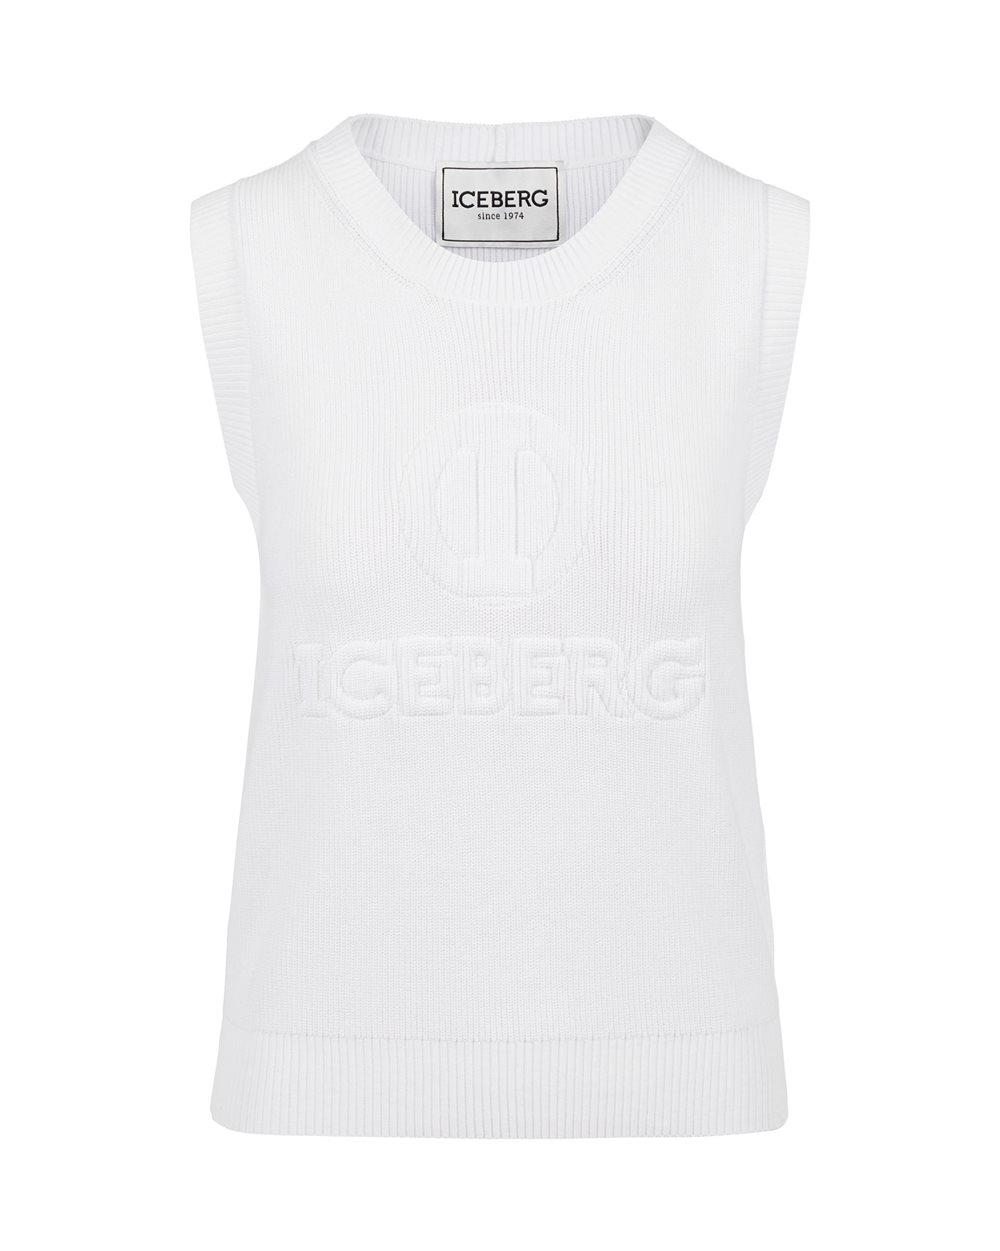 Vest with logo | Iceberg - Official Website